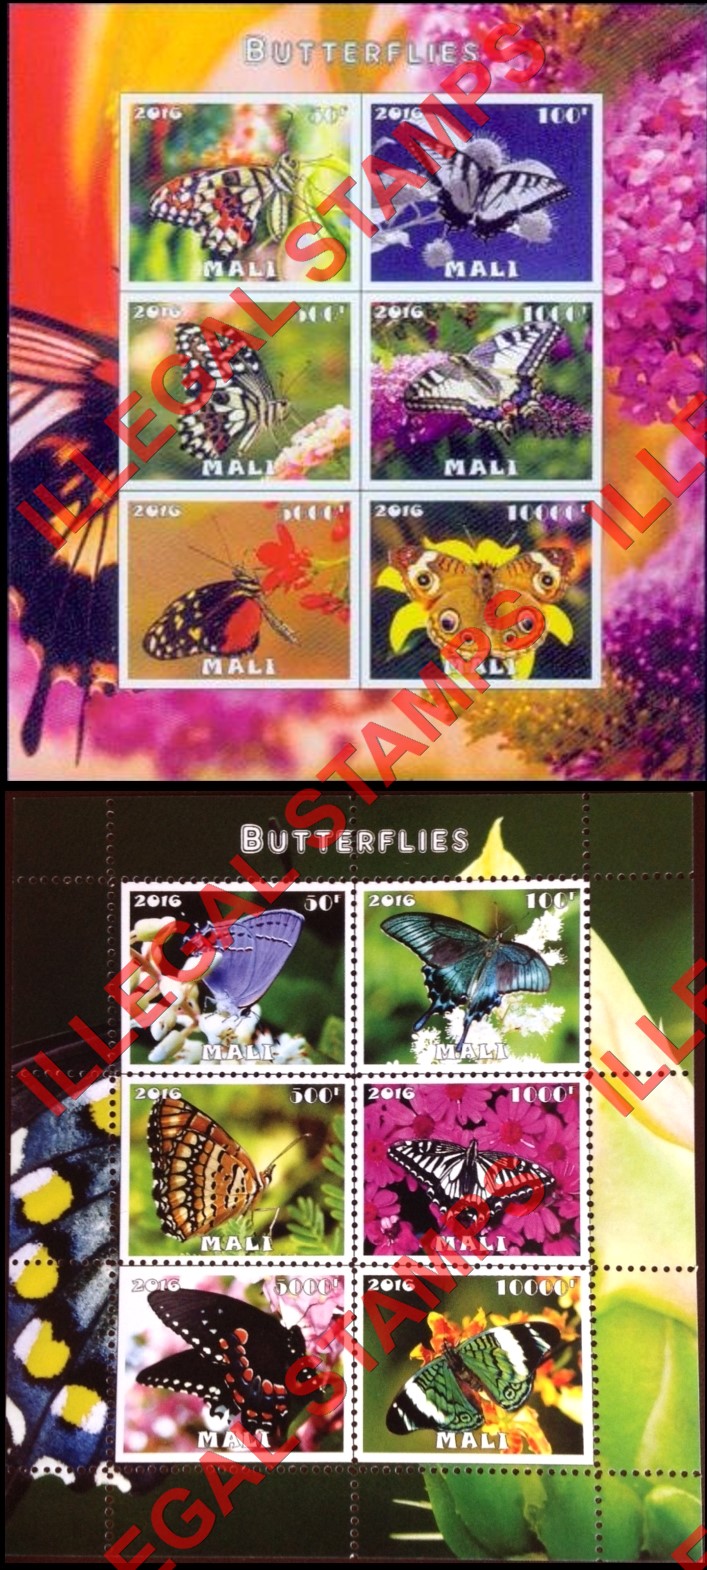 Mali 2016 Butterflies Illegal Stamp Souvenir Sheets of 6 (Part 2)